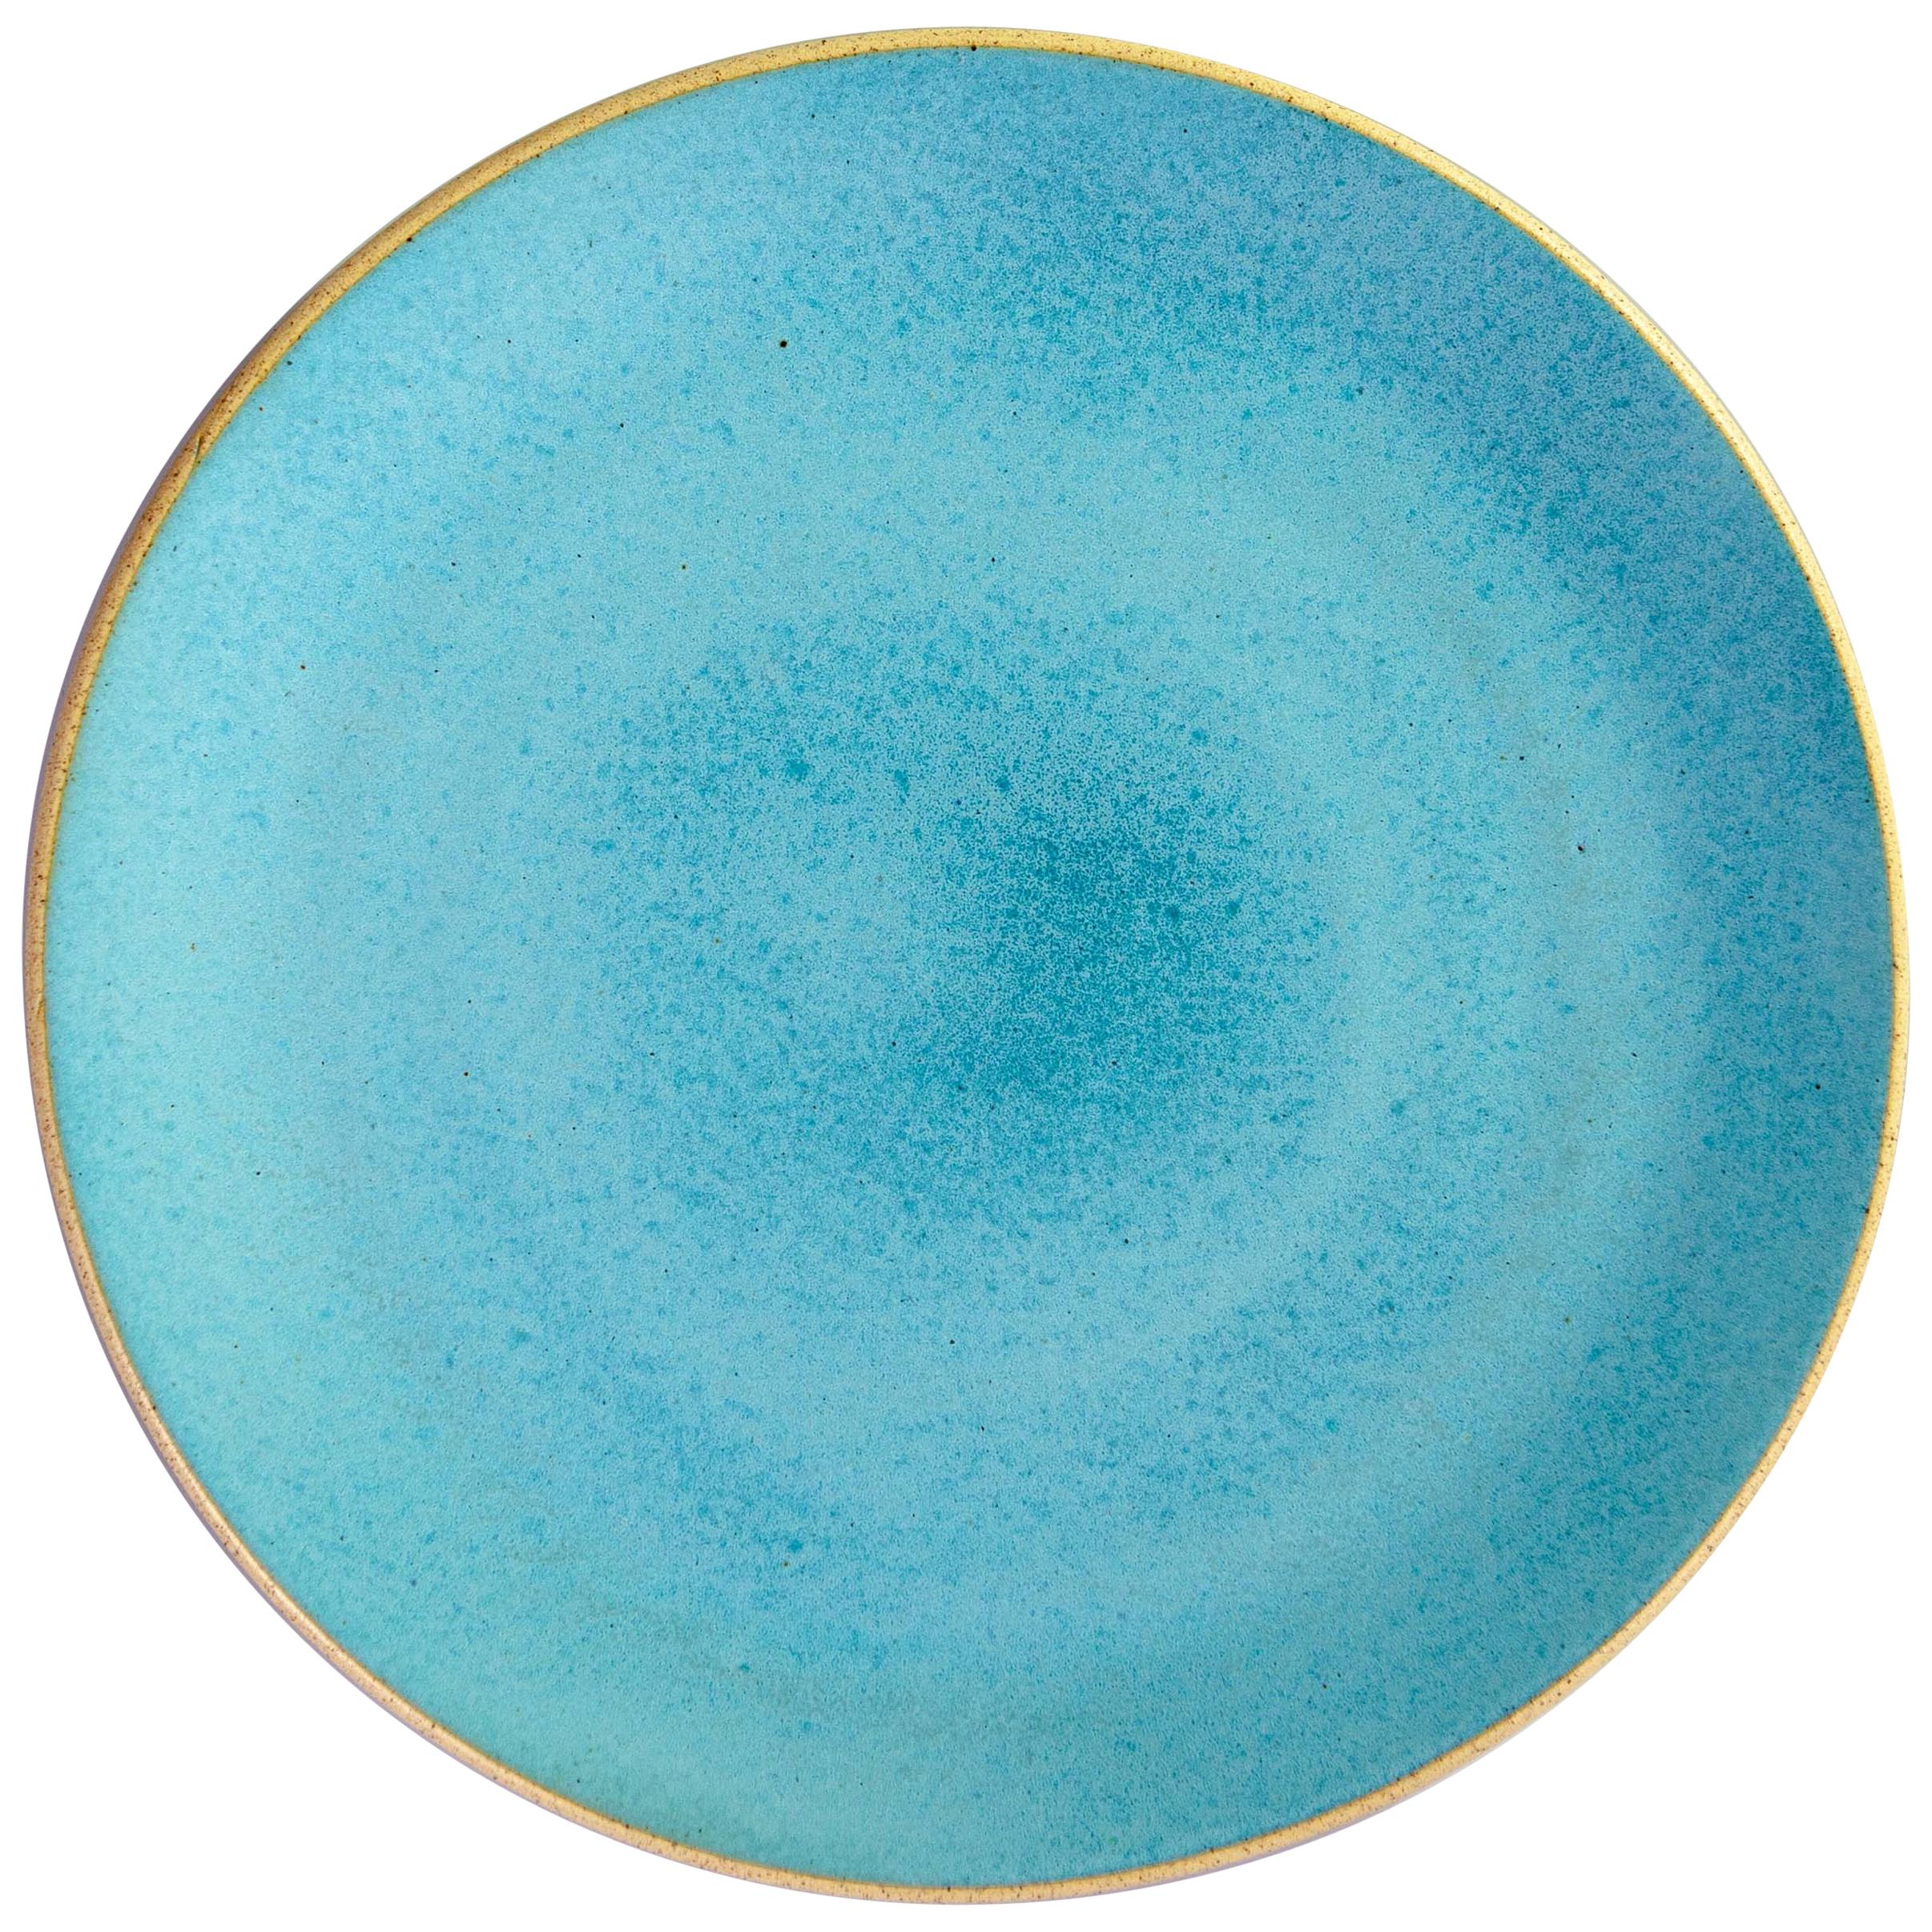 Handmade Ceramic Stoneware Dinner Plate in Turquoise, in Stock